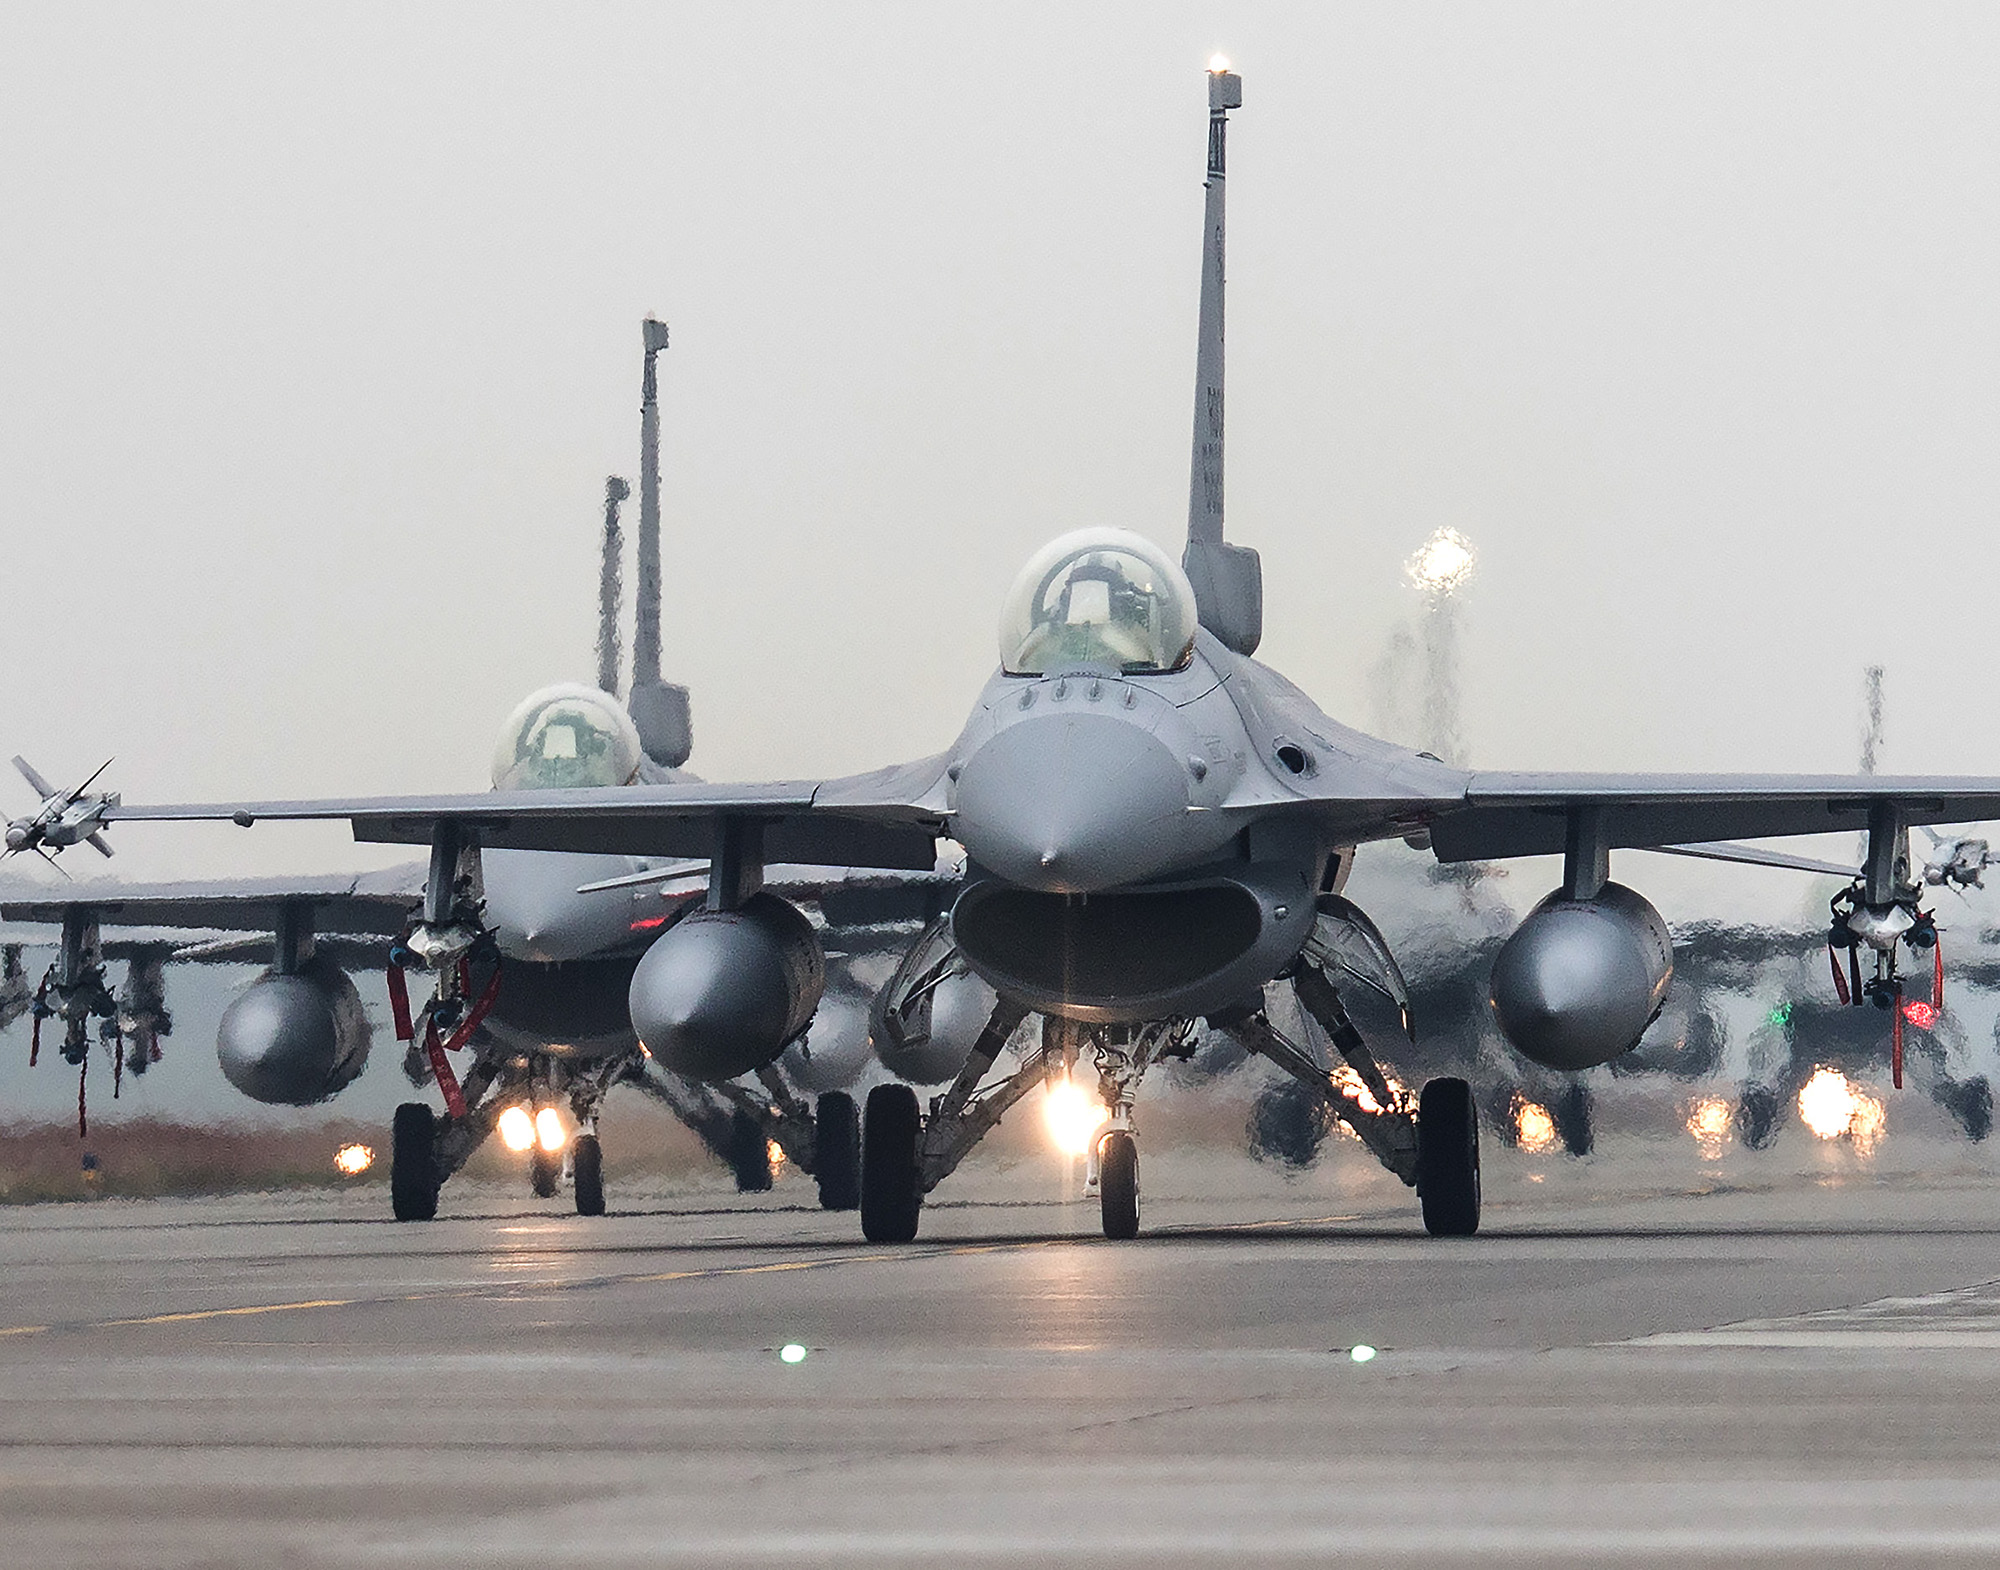 Taiwan's F-16 Fleet Upgrades Signal Strengthened Defense Capabilities